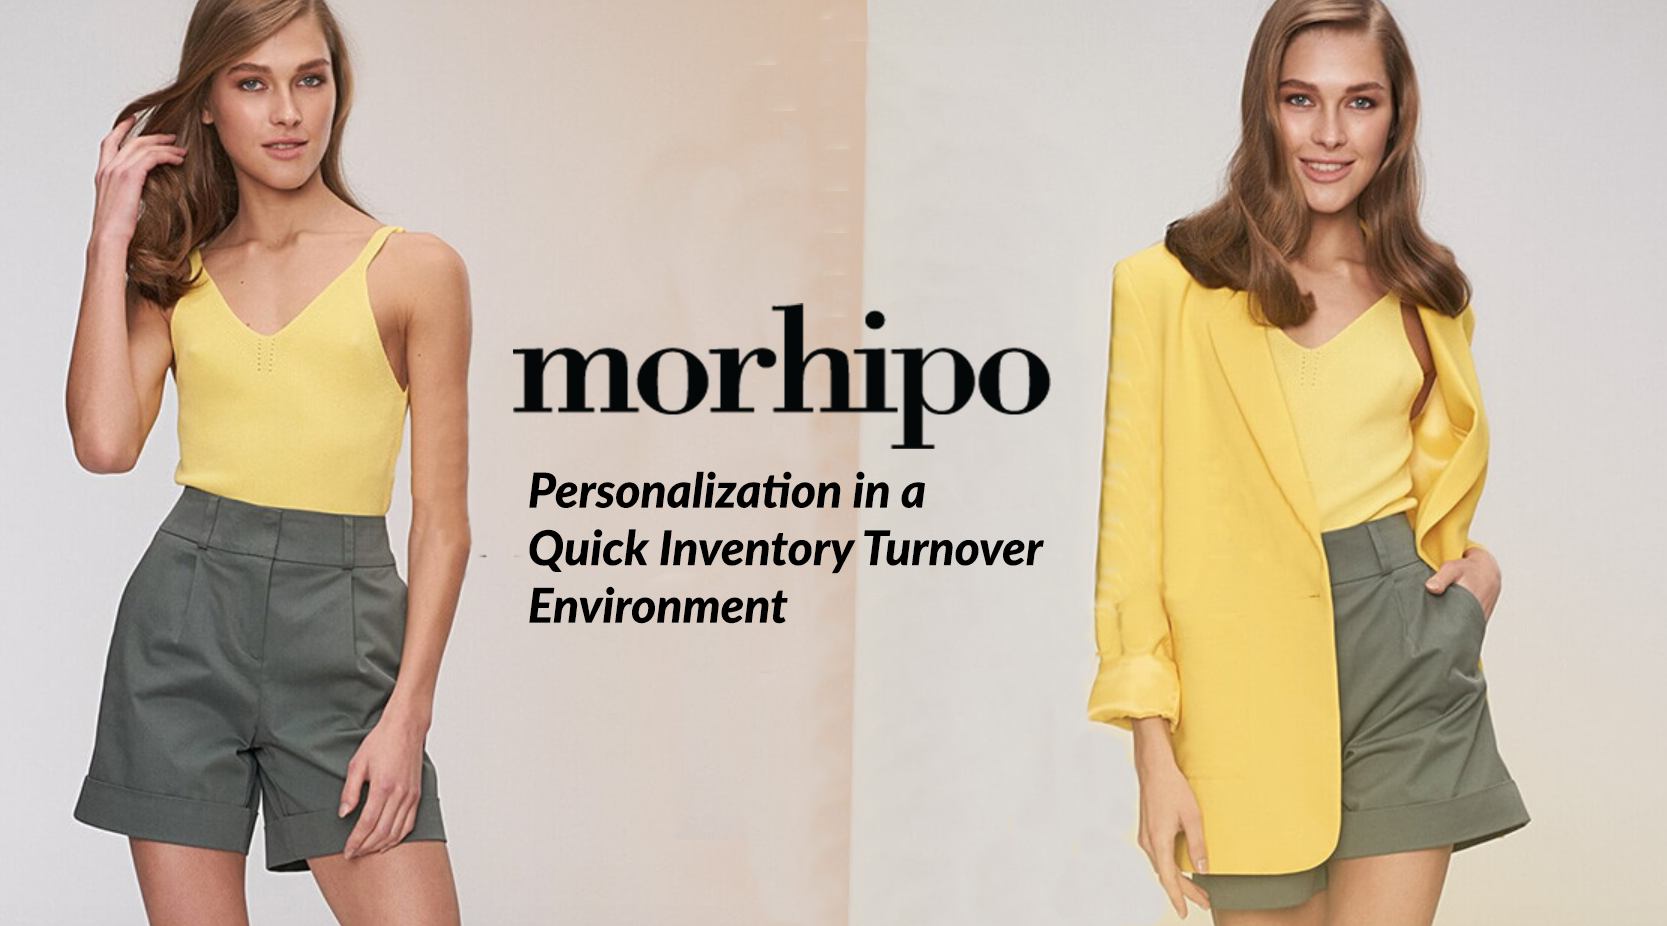 Morhipo.com website - banner2